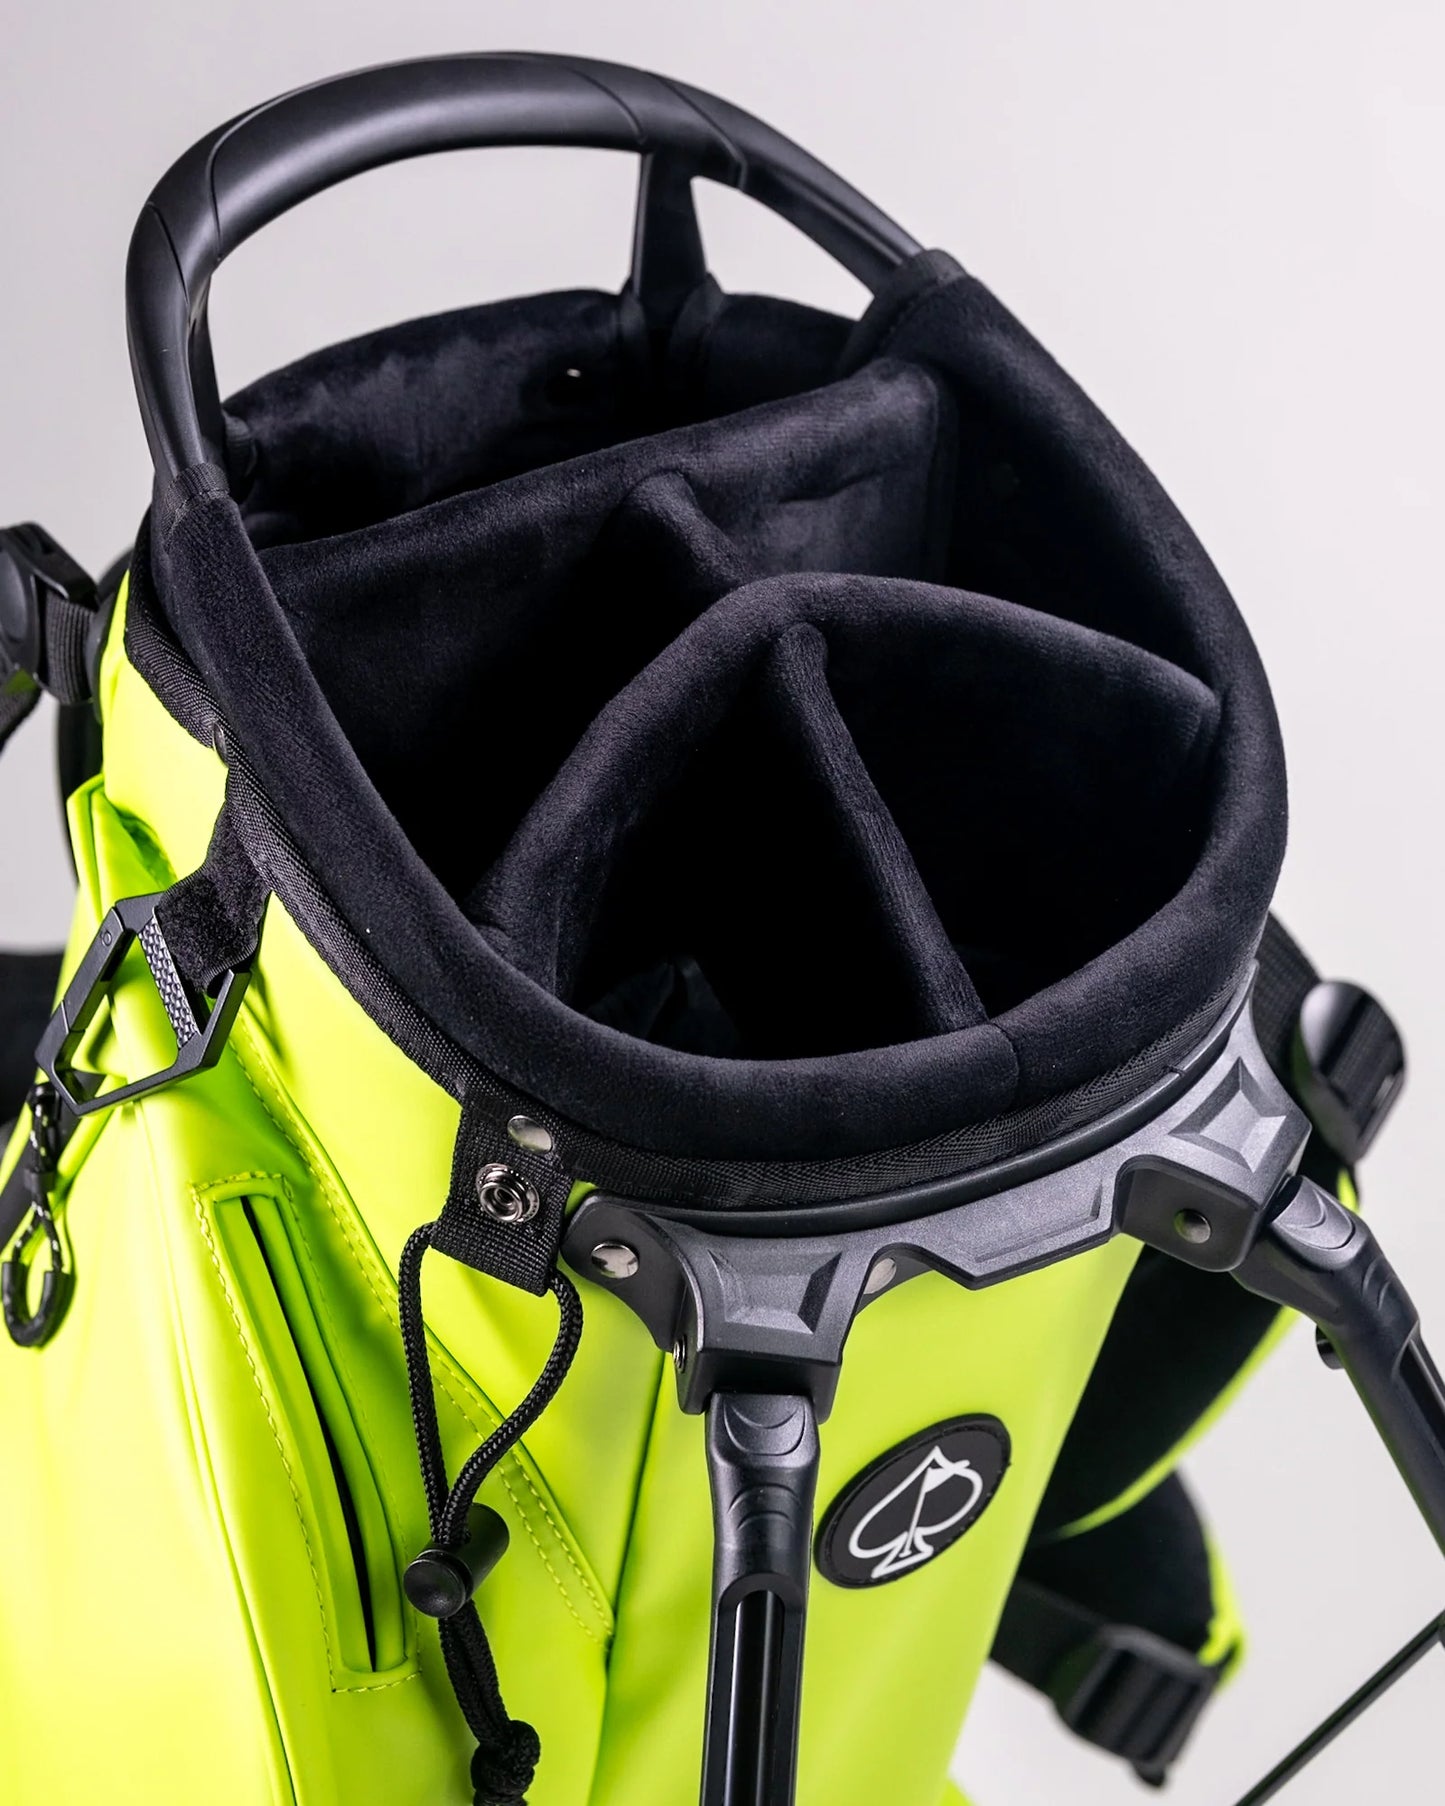 Player Preferred™ Golf Bag - Electric Lime